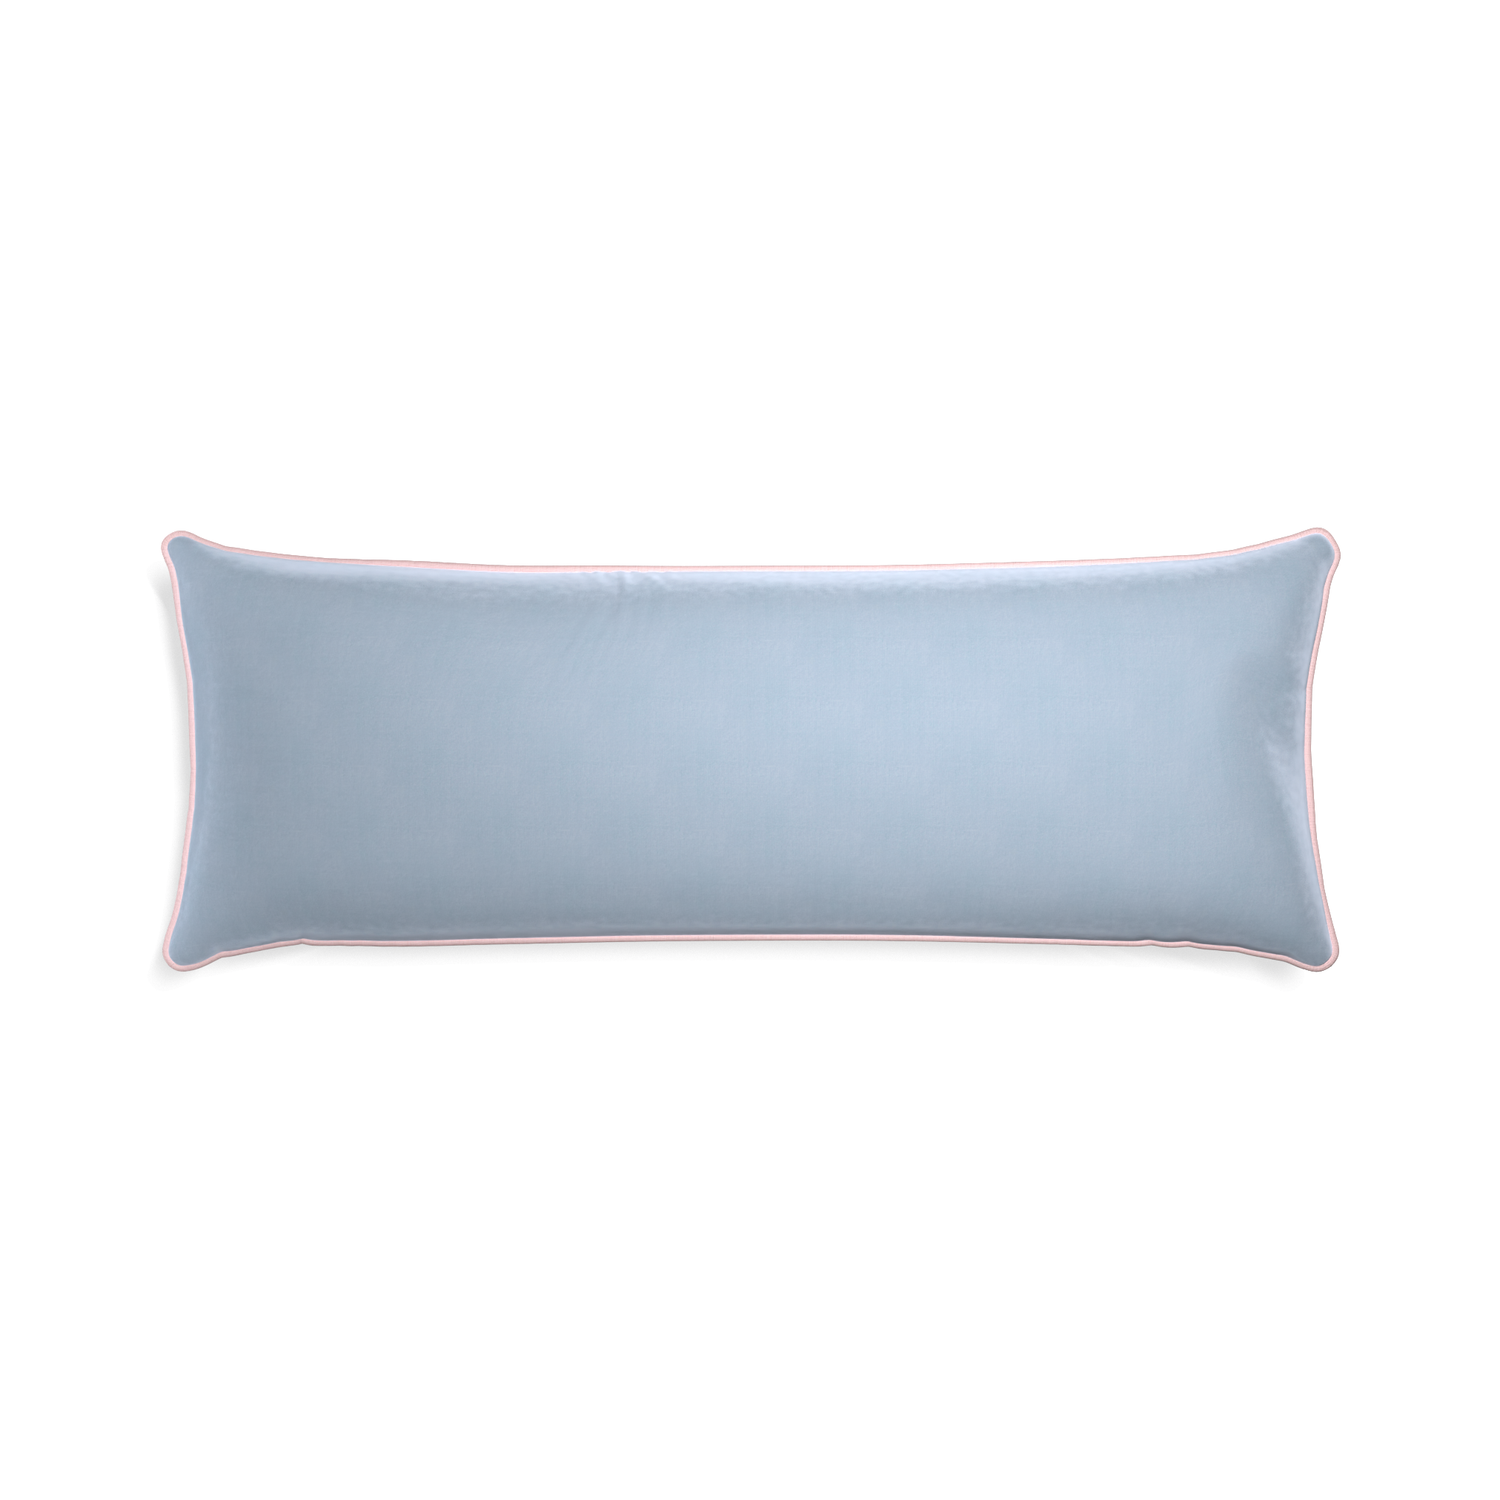 Xl-lumbar sky velvet custom pillow with petal piping on white background